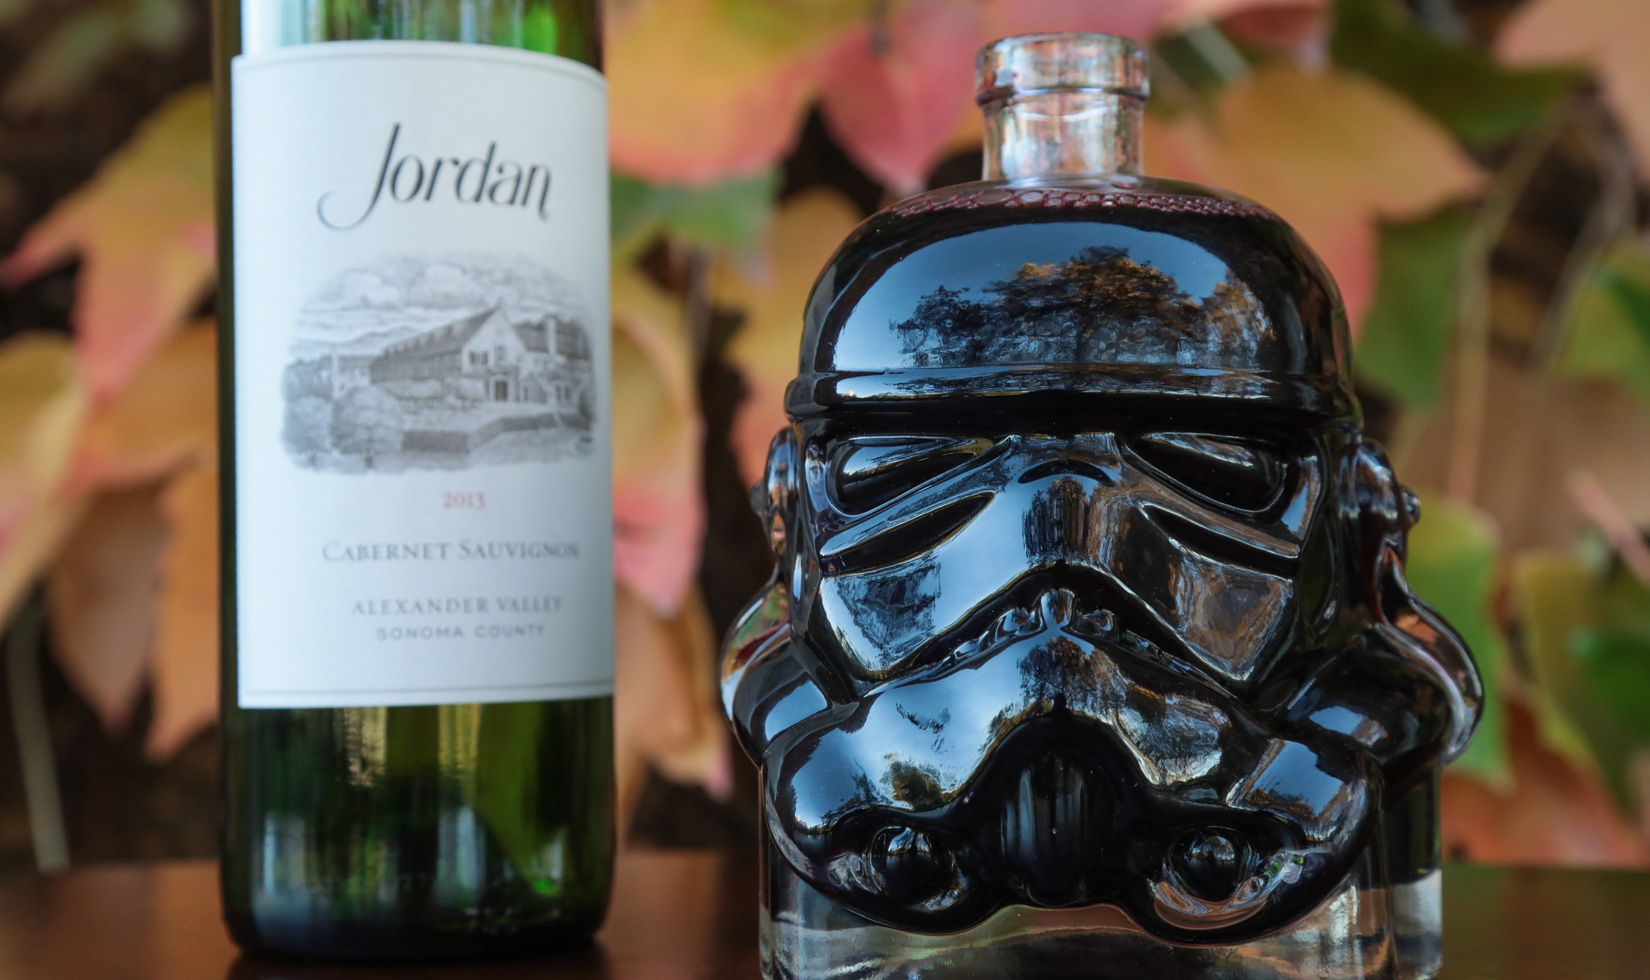 Star Wars wine decanter with Jordan Cabernet Sauvignon